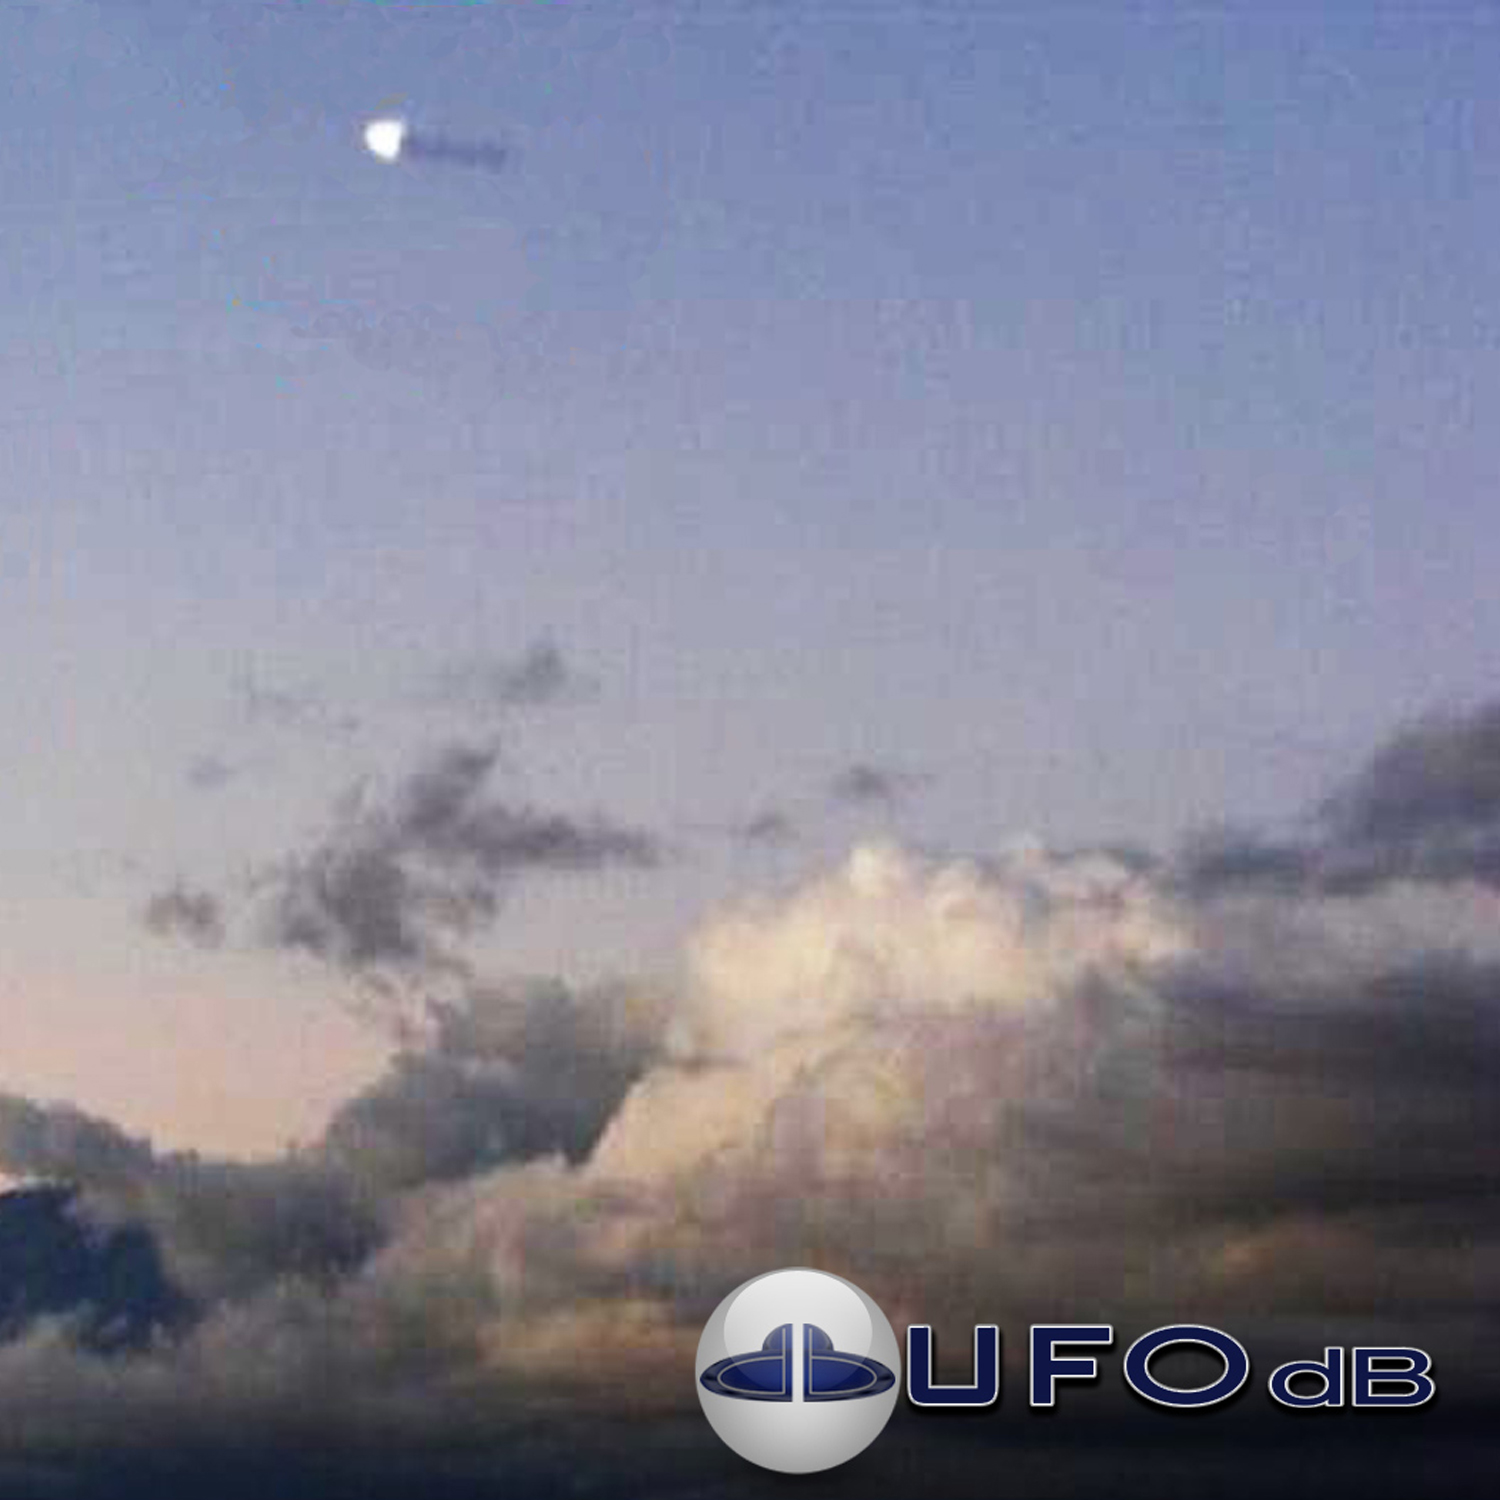 Long Mothership UFO near Africa Mount Kilimanjaro Kenya | June 6 2009 UFO Picture #233-2